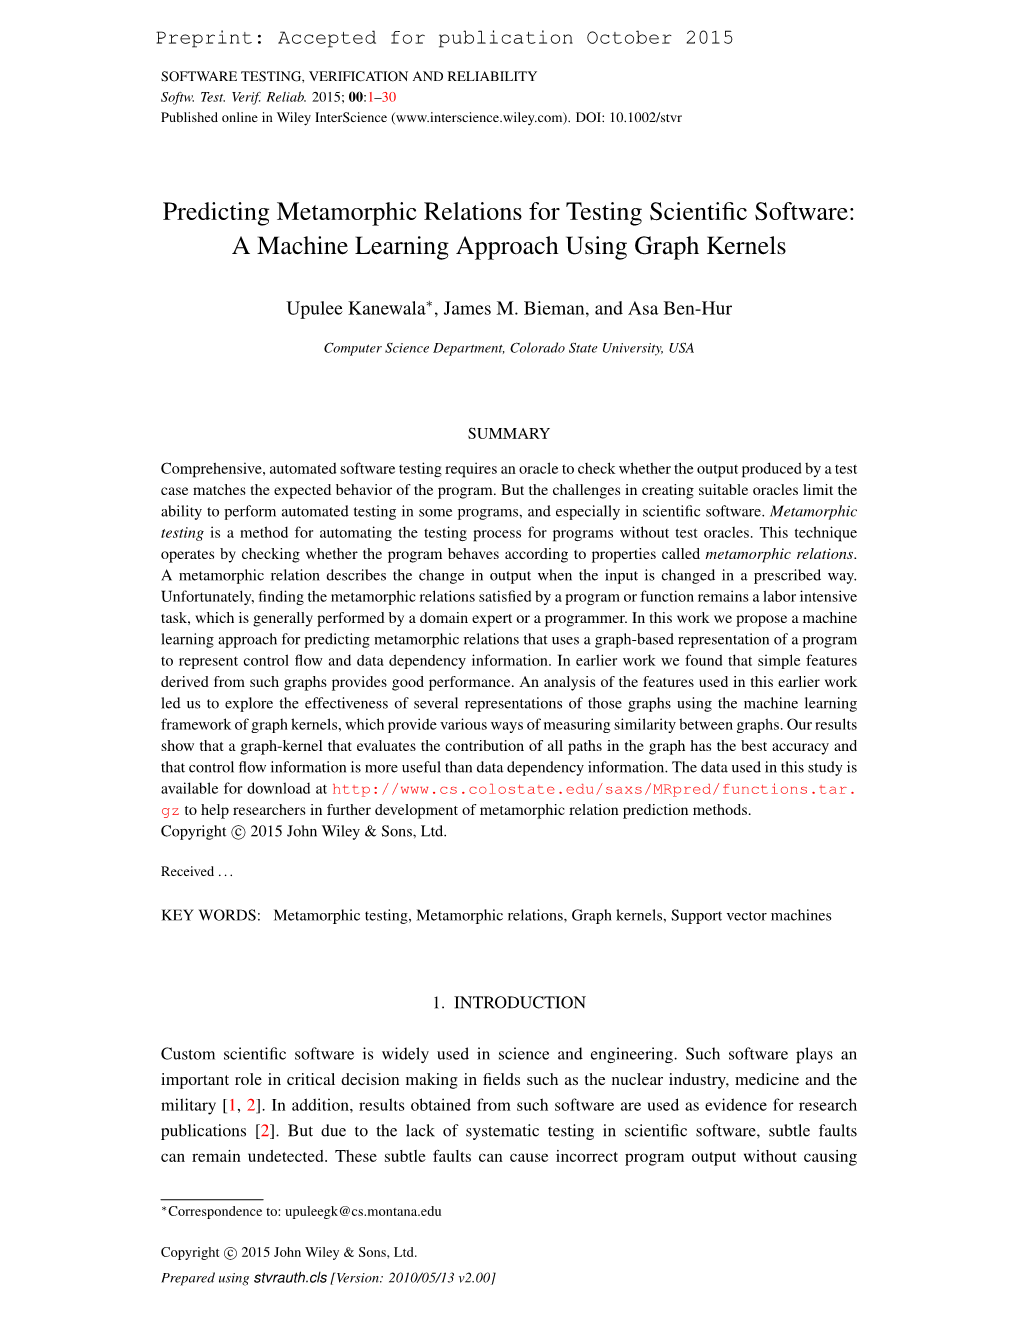 Predicting Metamorphic Relations for Testing Scientific Software 3